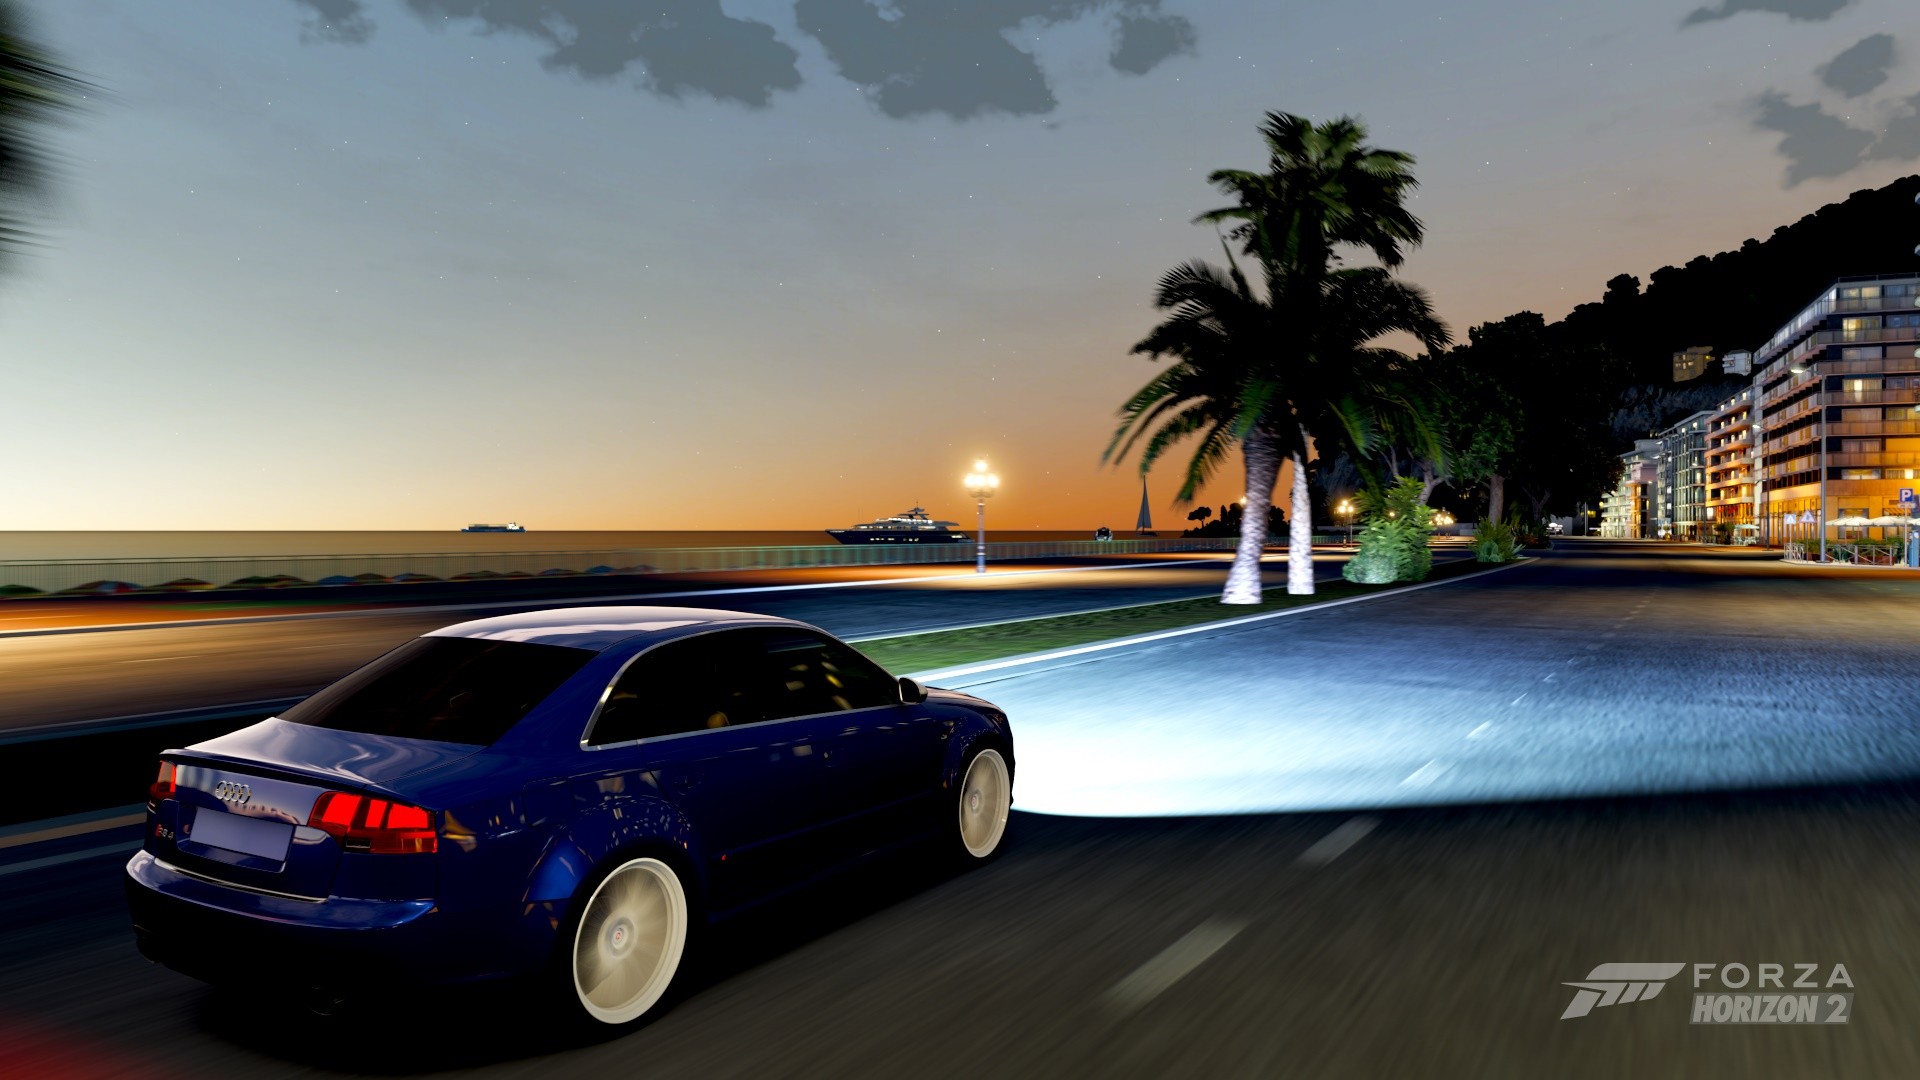 General 1920x1080 Forza Horizon 2 Audi car Turn 10 Studios video games blue cars racing vehicle